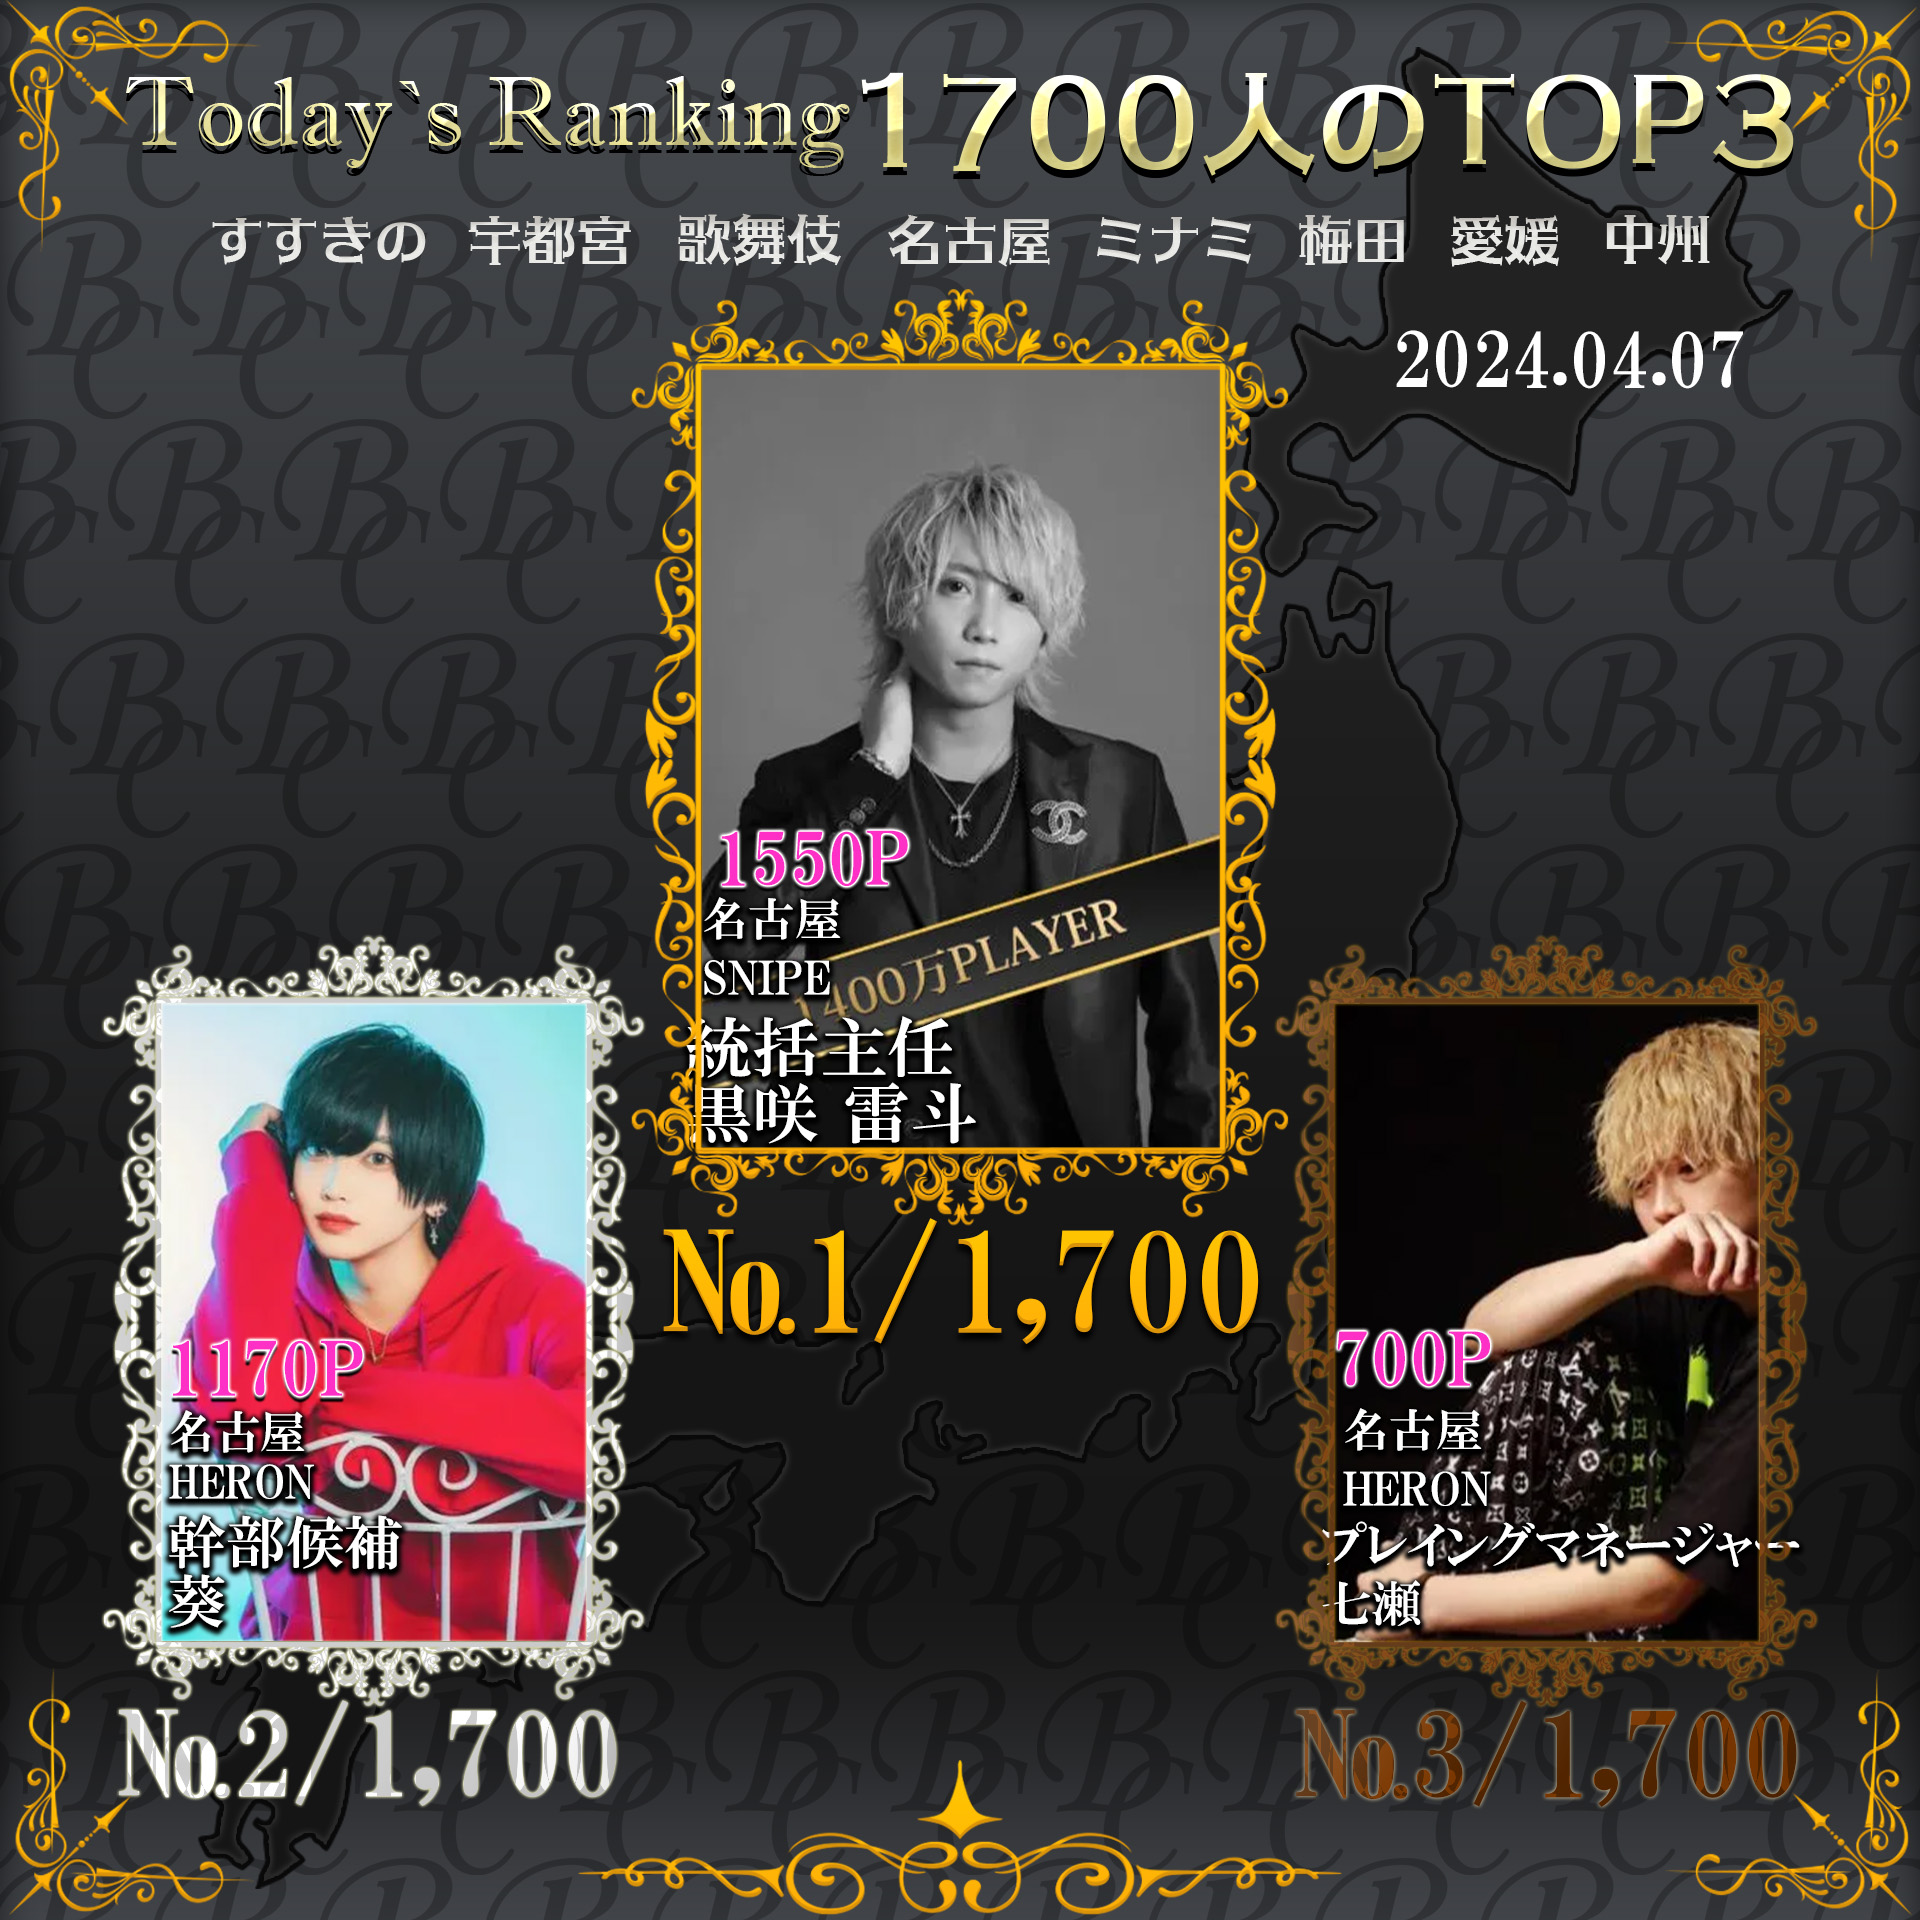 4/7 Today’s Ranking